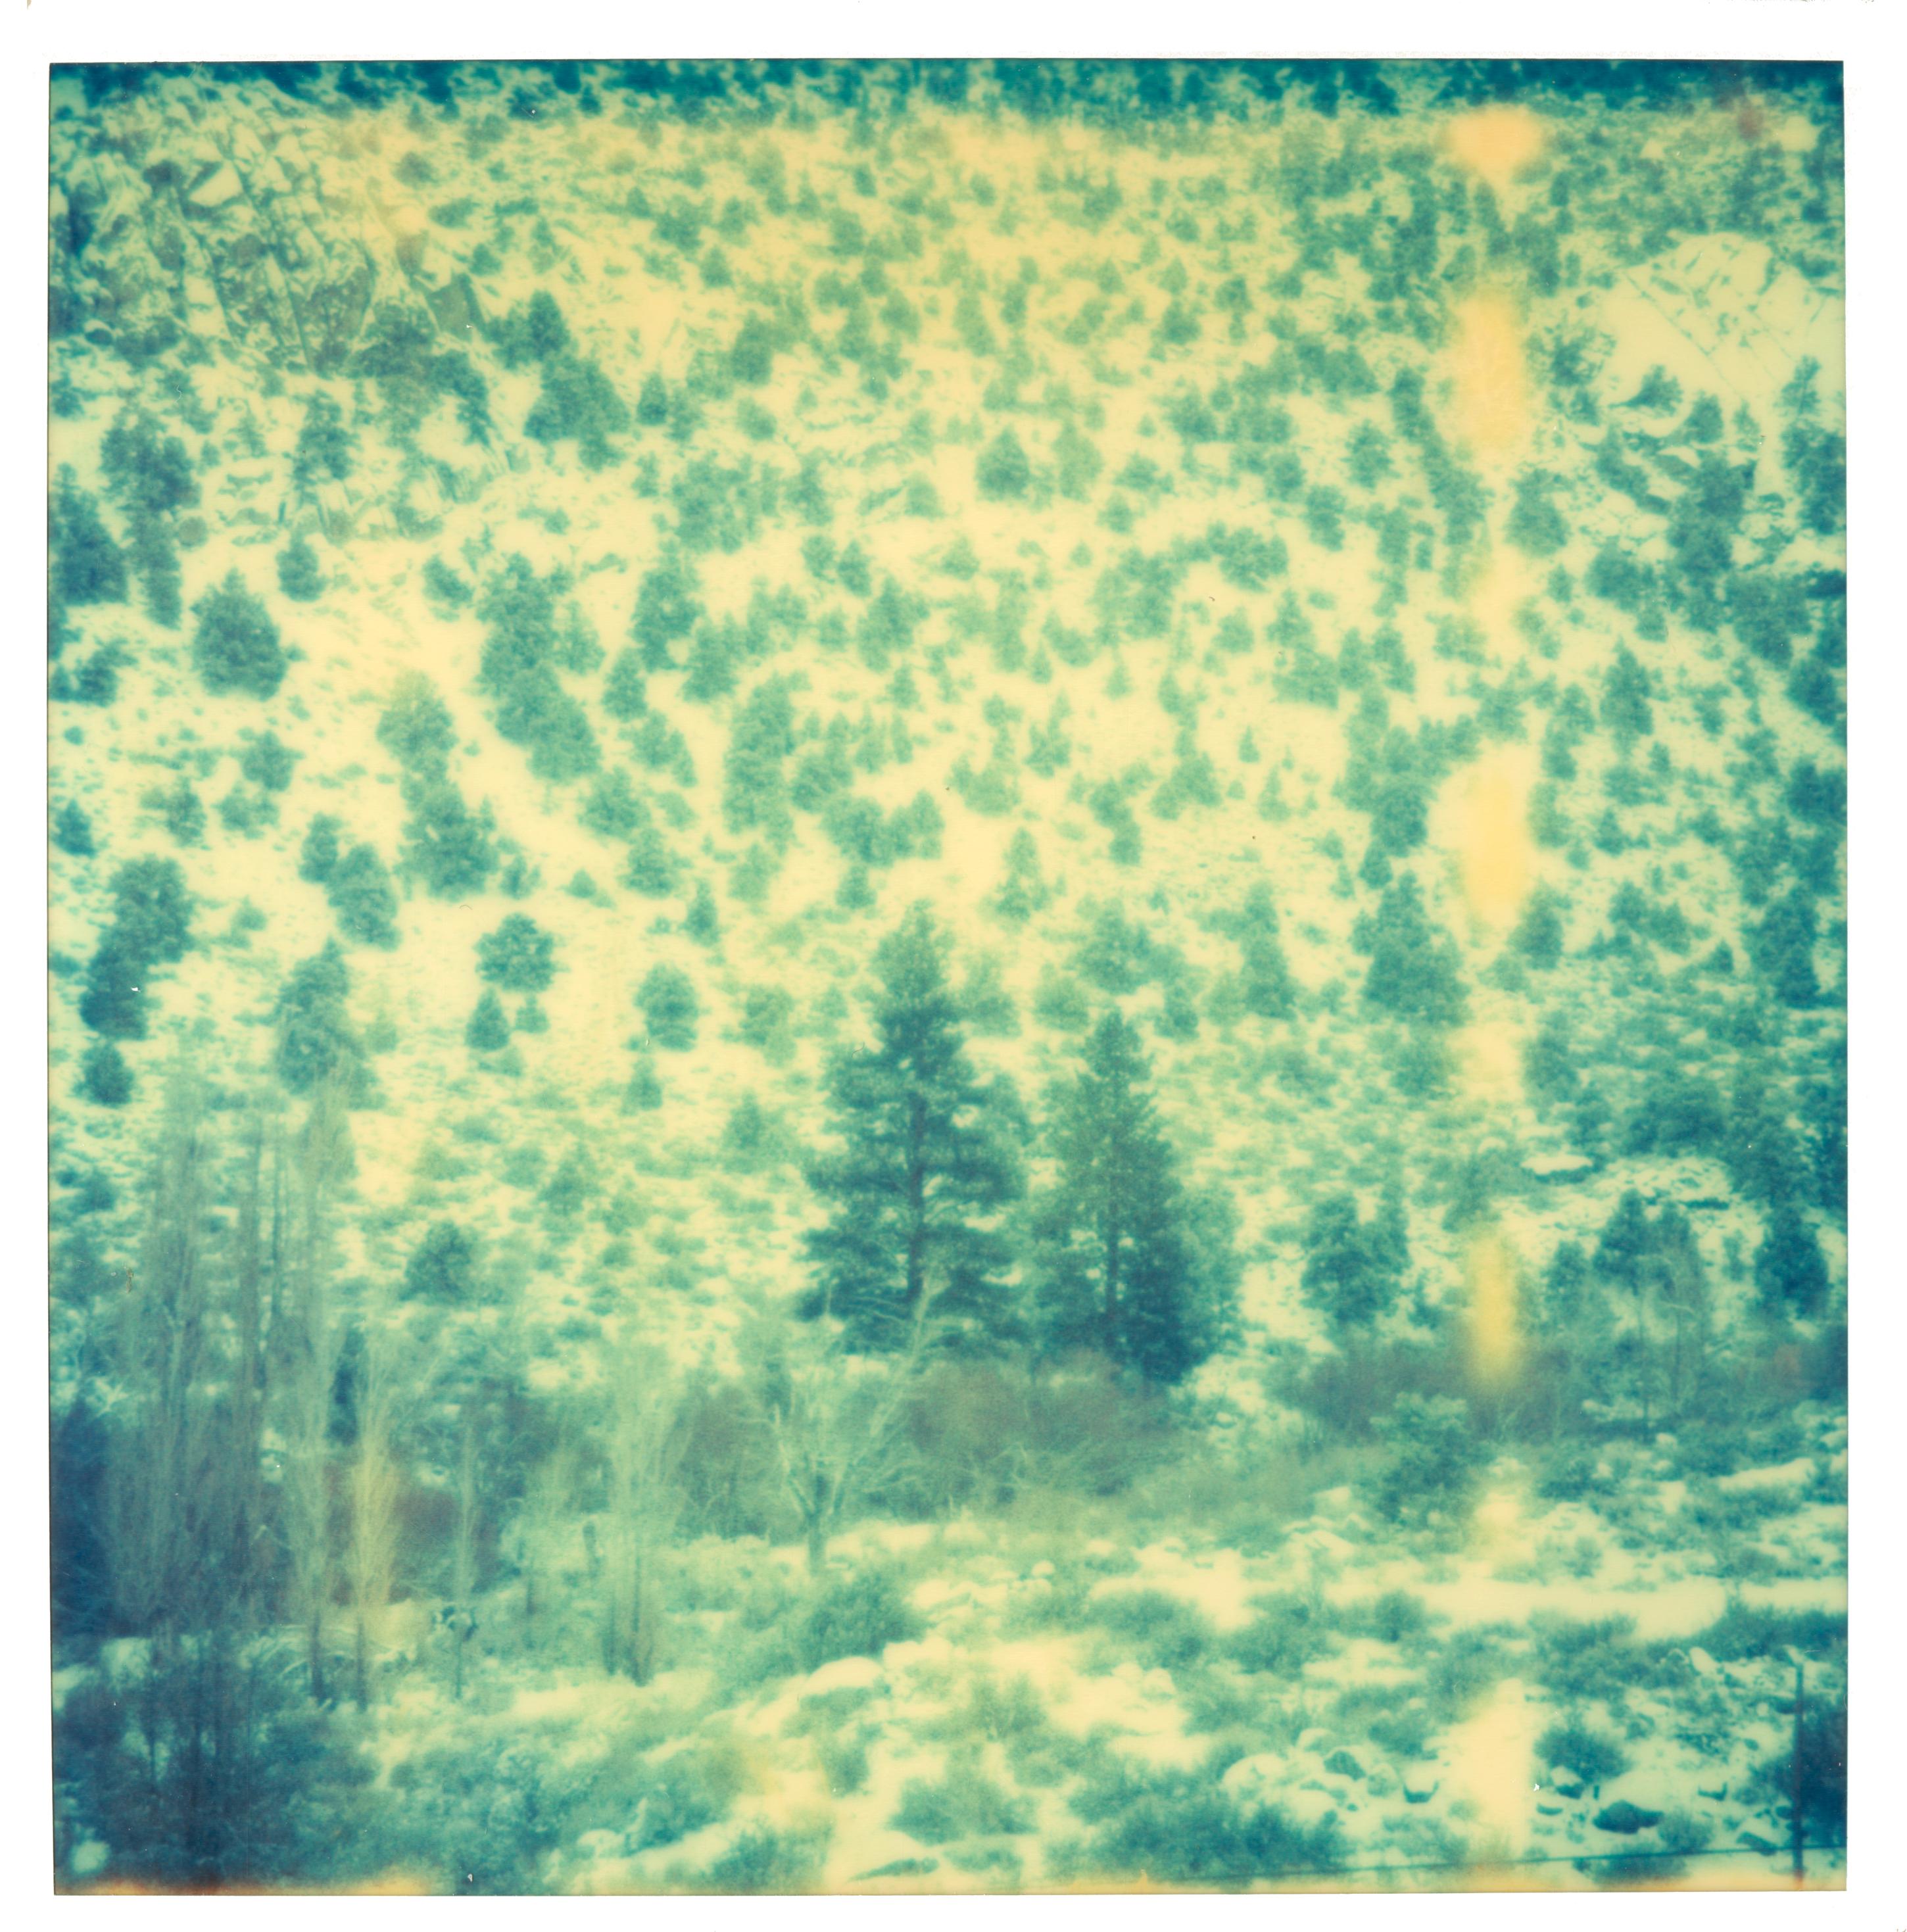 Magic Mountain 1 (Memories of Green) analogique, expiré, paysage